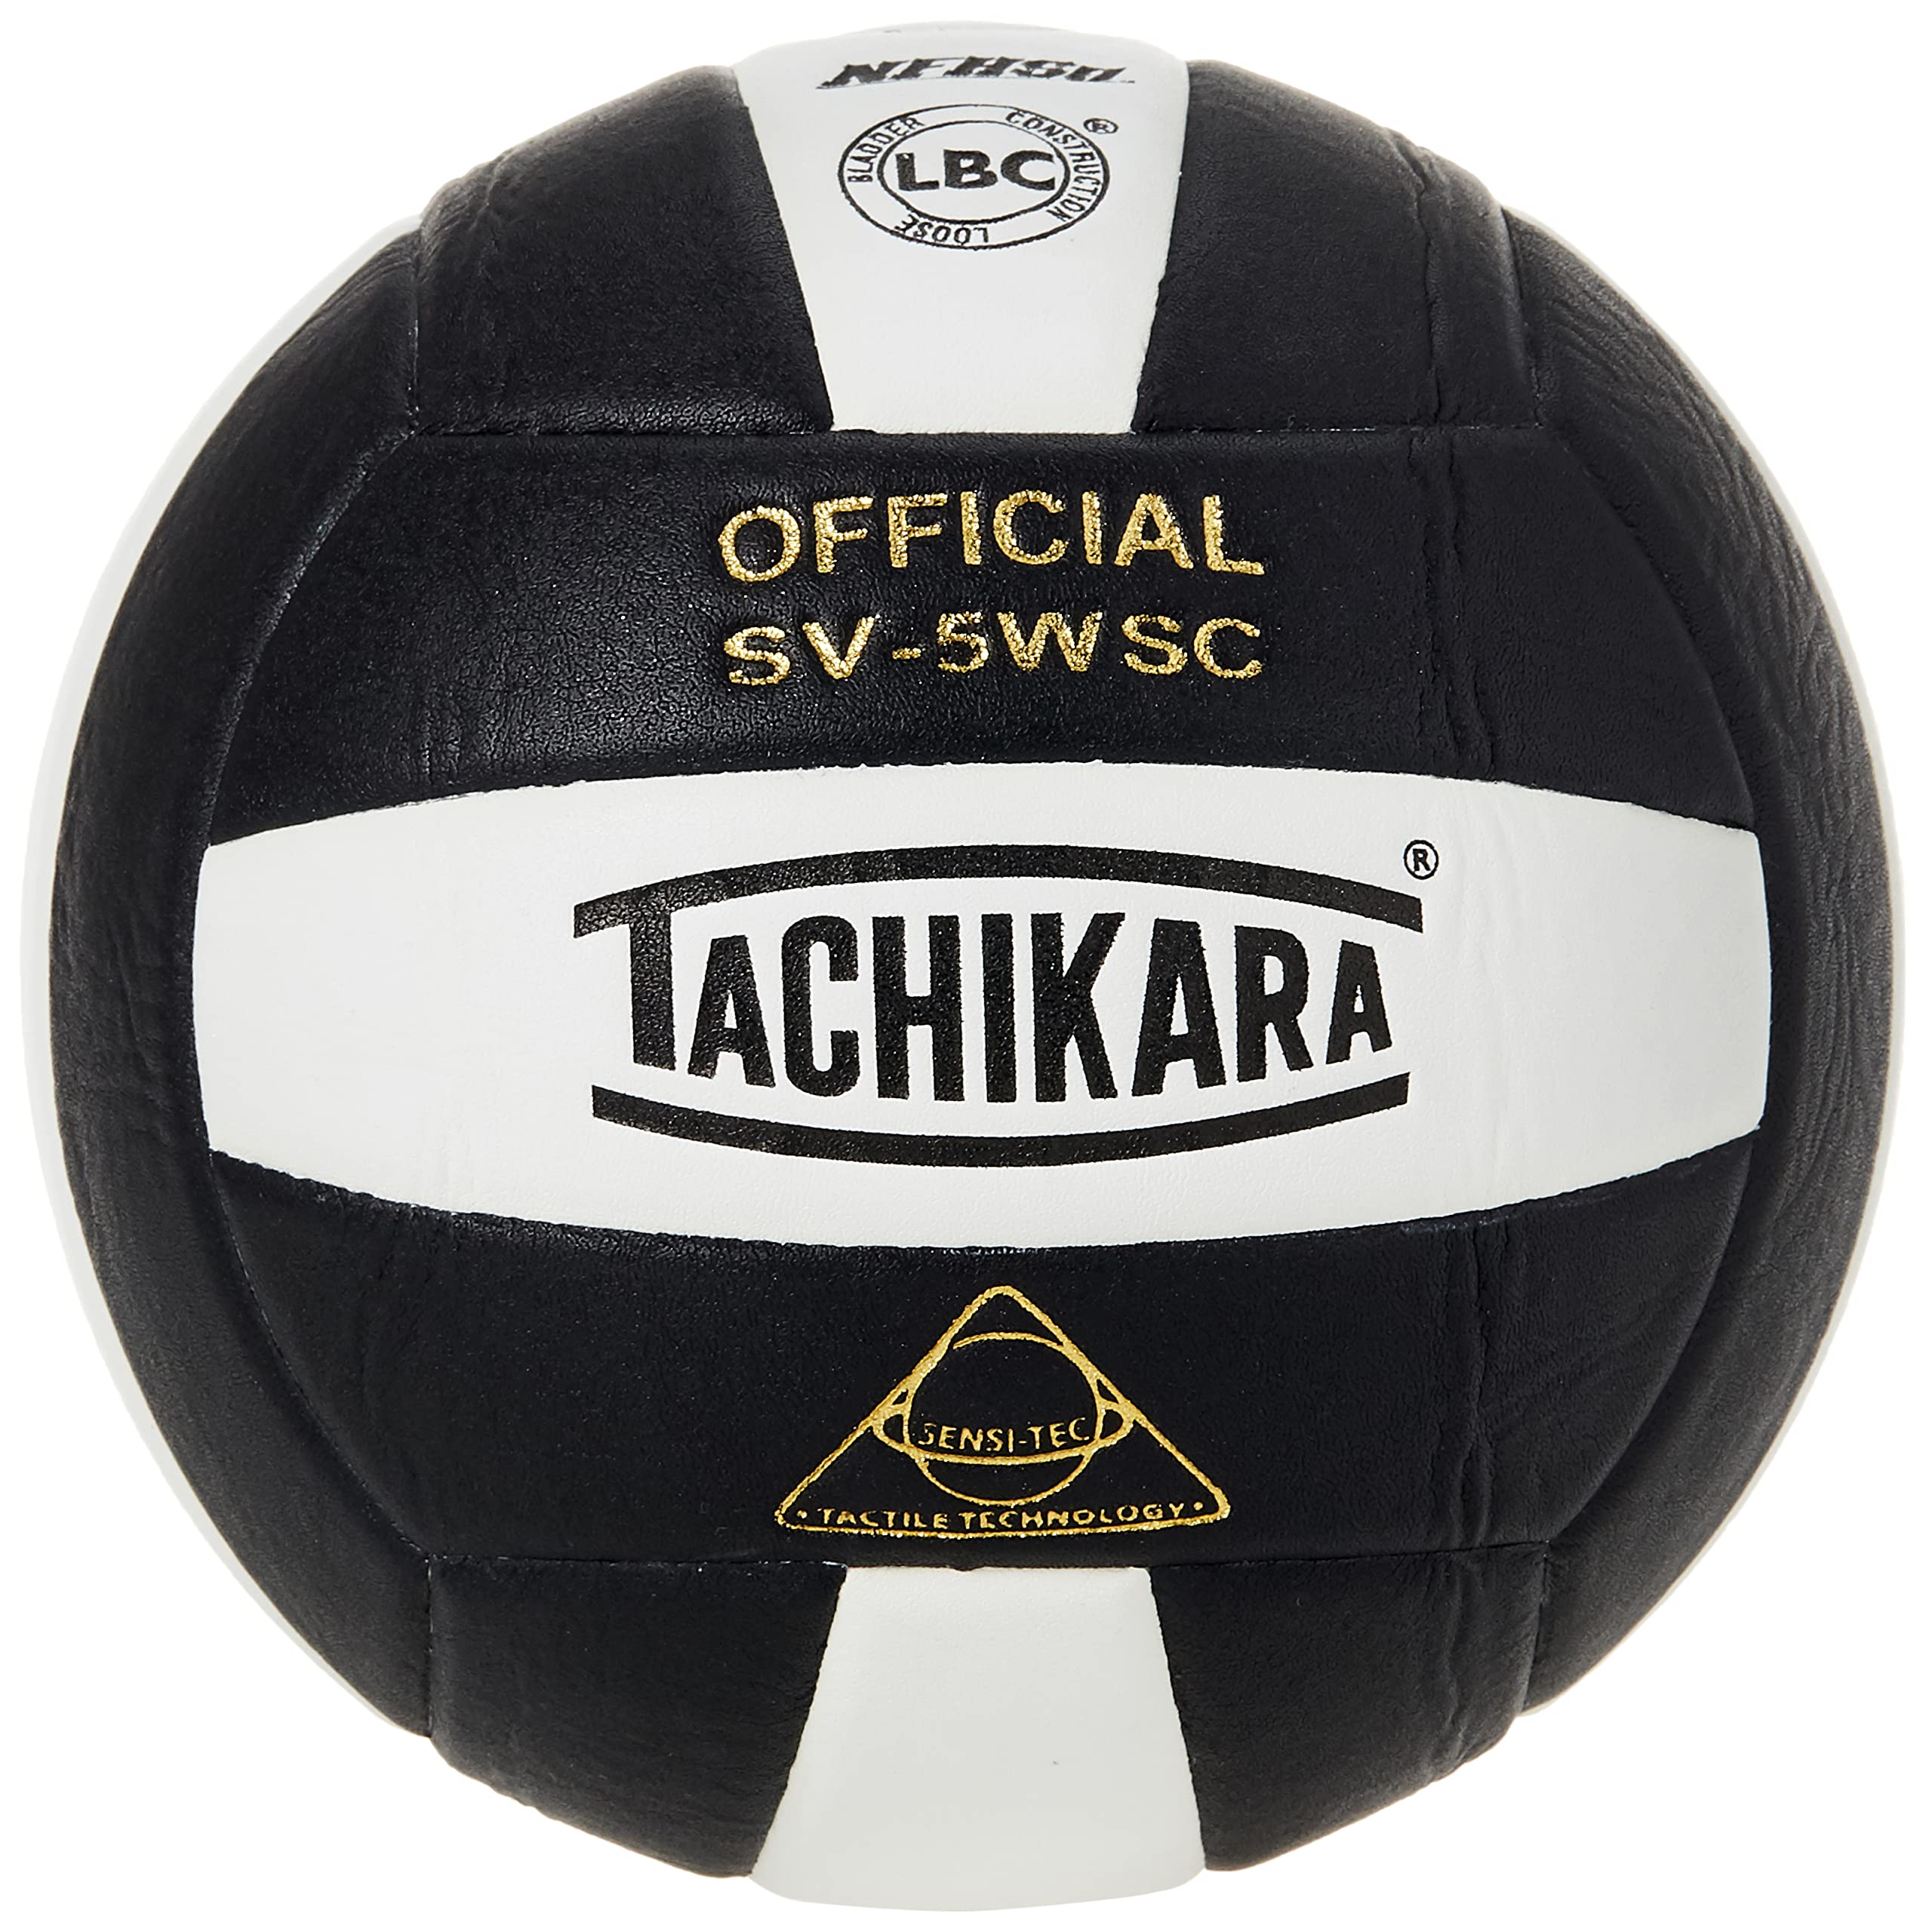 Tachikara Sensi-Tec 复合材料 SV-5WSC 排球 (EA)